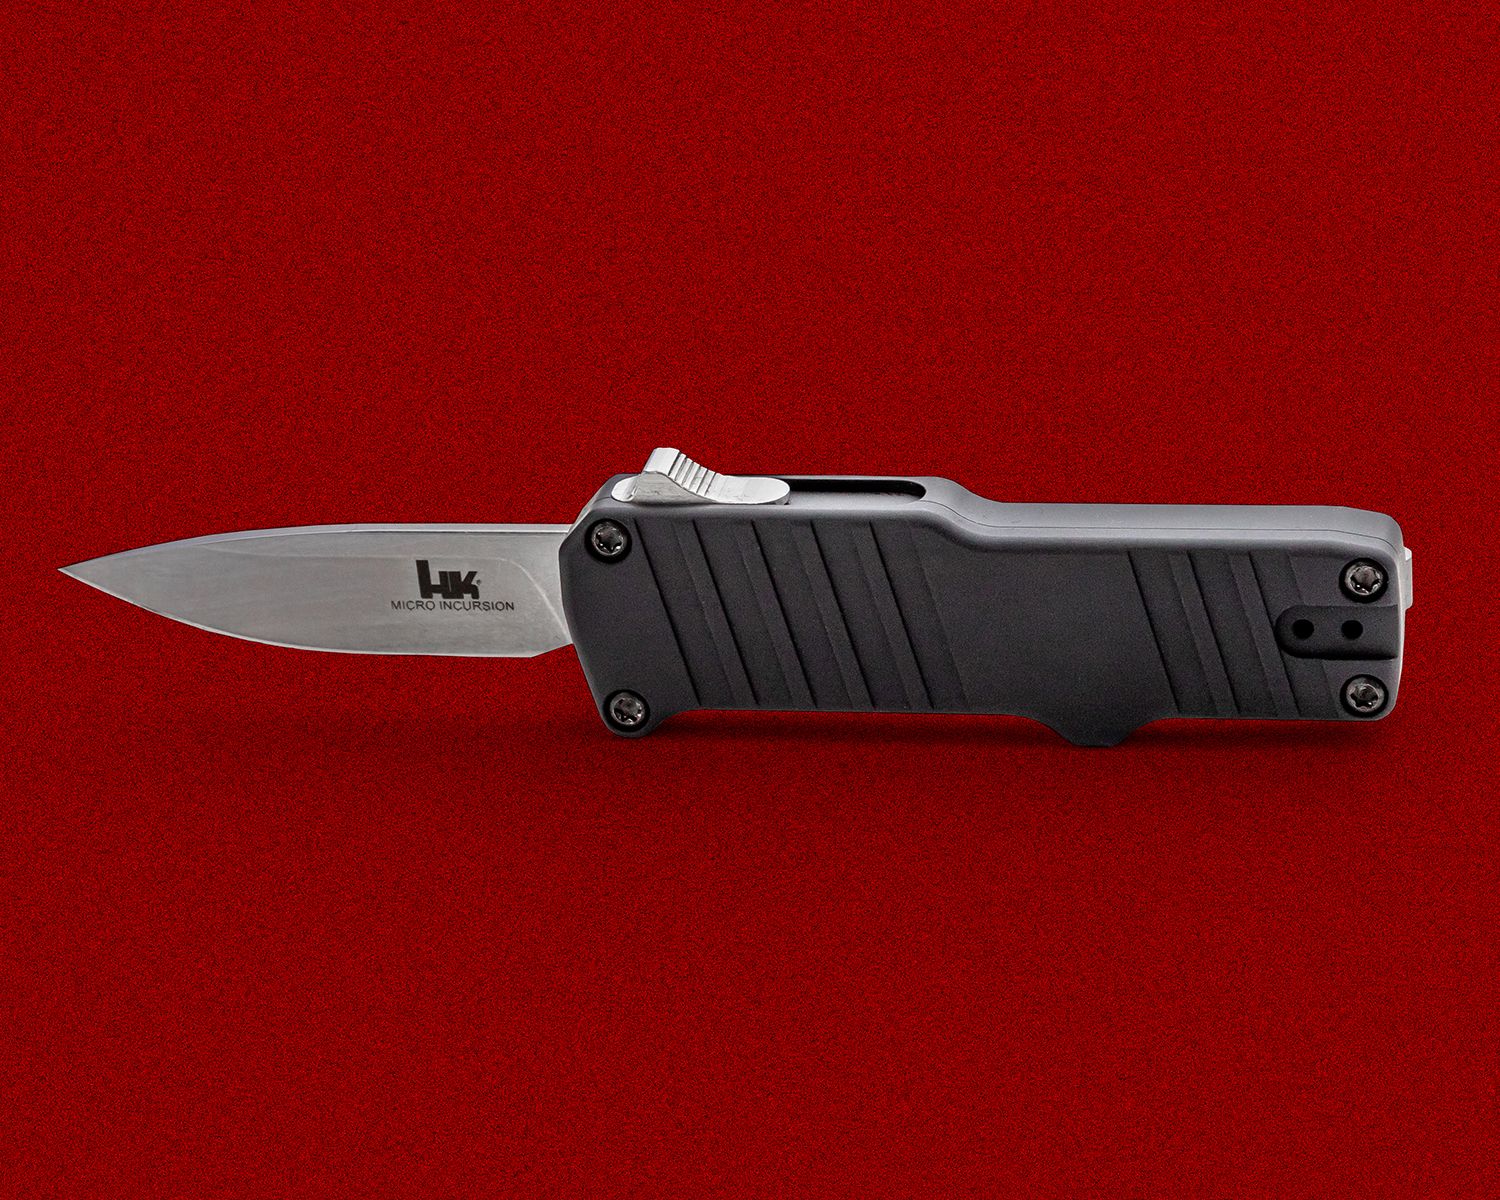 HK Knives by Hogue Knives at KnifeCenter